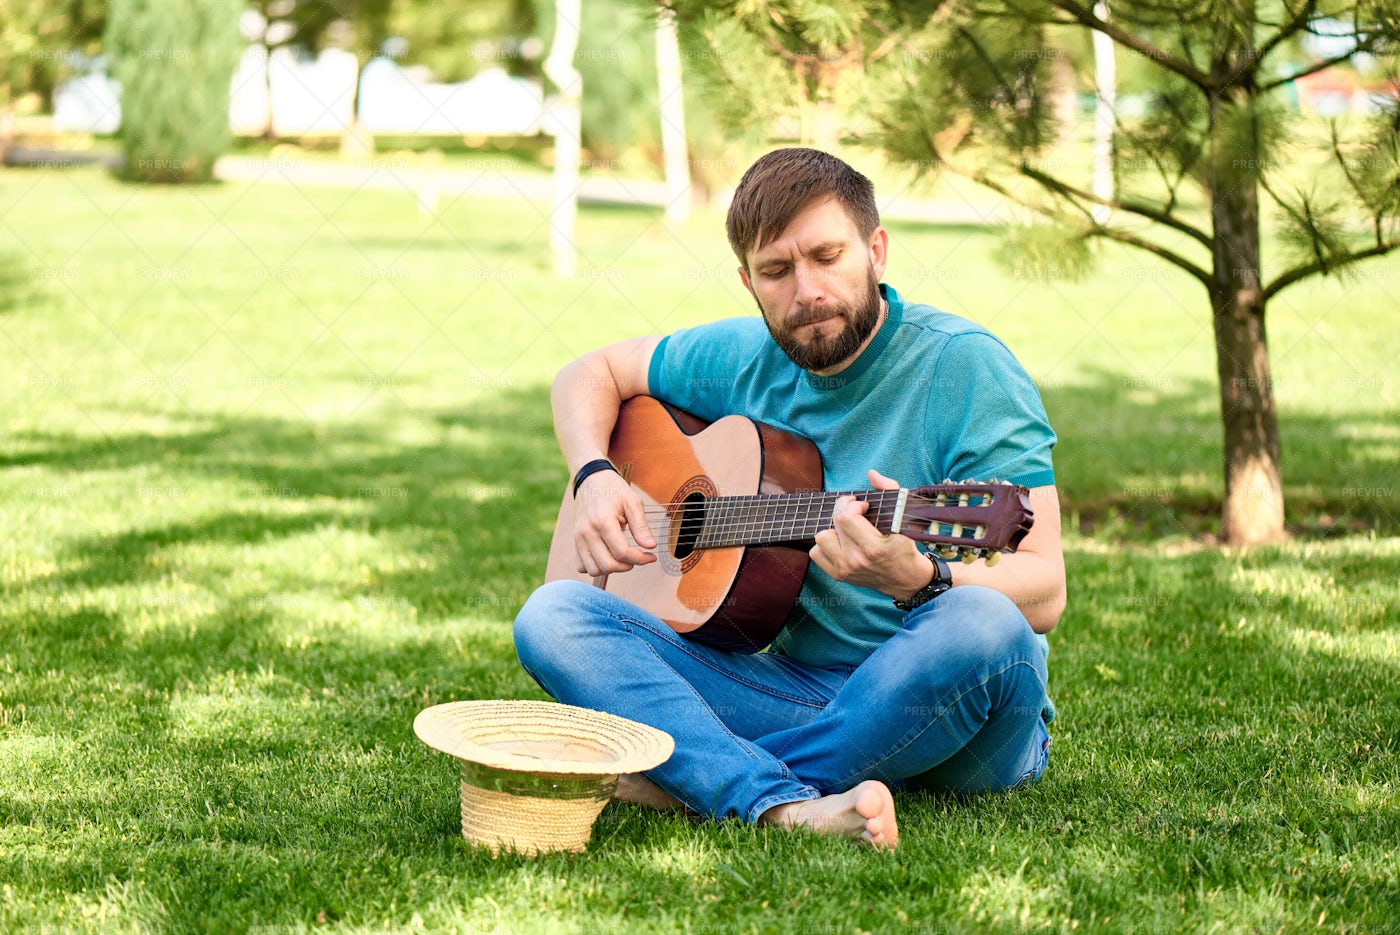 Practicing Guitar In A Park: Stock Photos